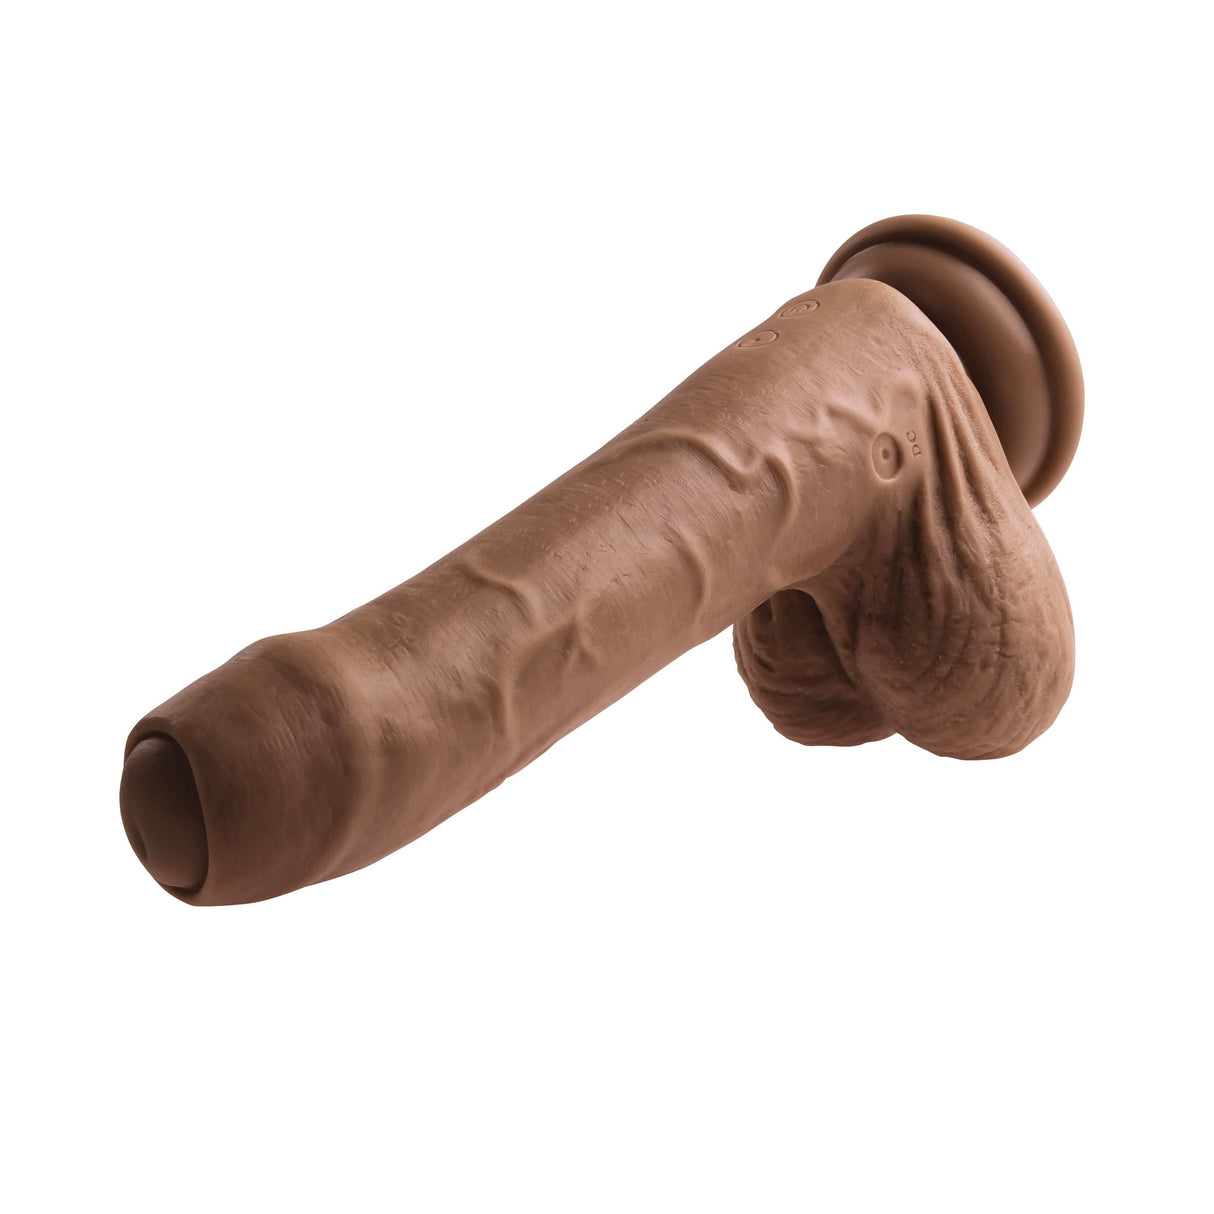 Evolved - Peek A Boo Uncircumcised Realistic Vibrating Dildo 8" CherryAffairs